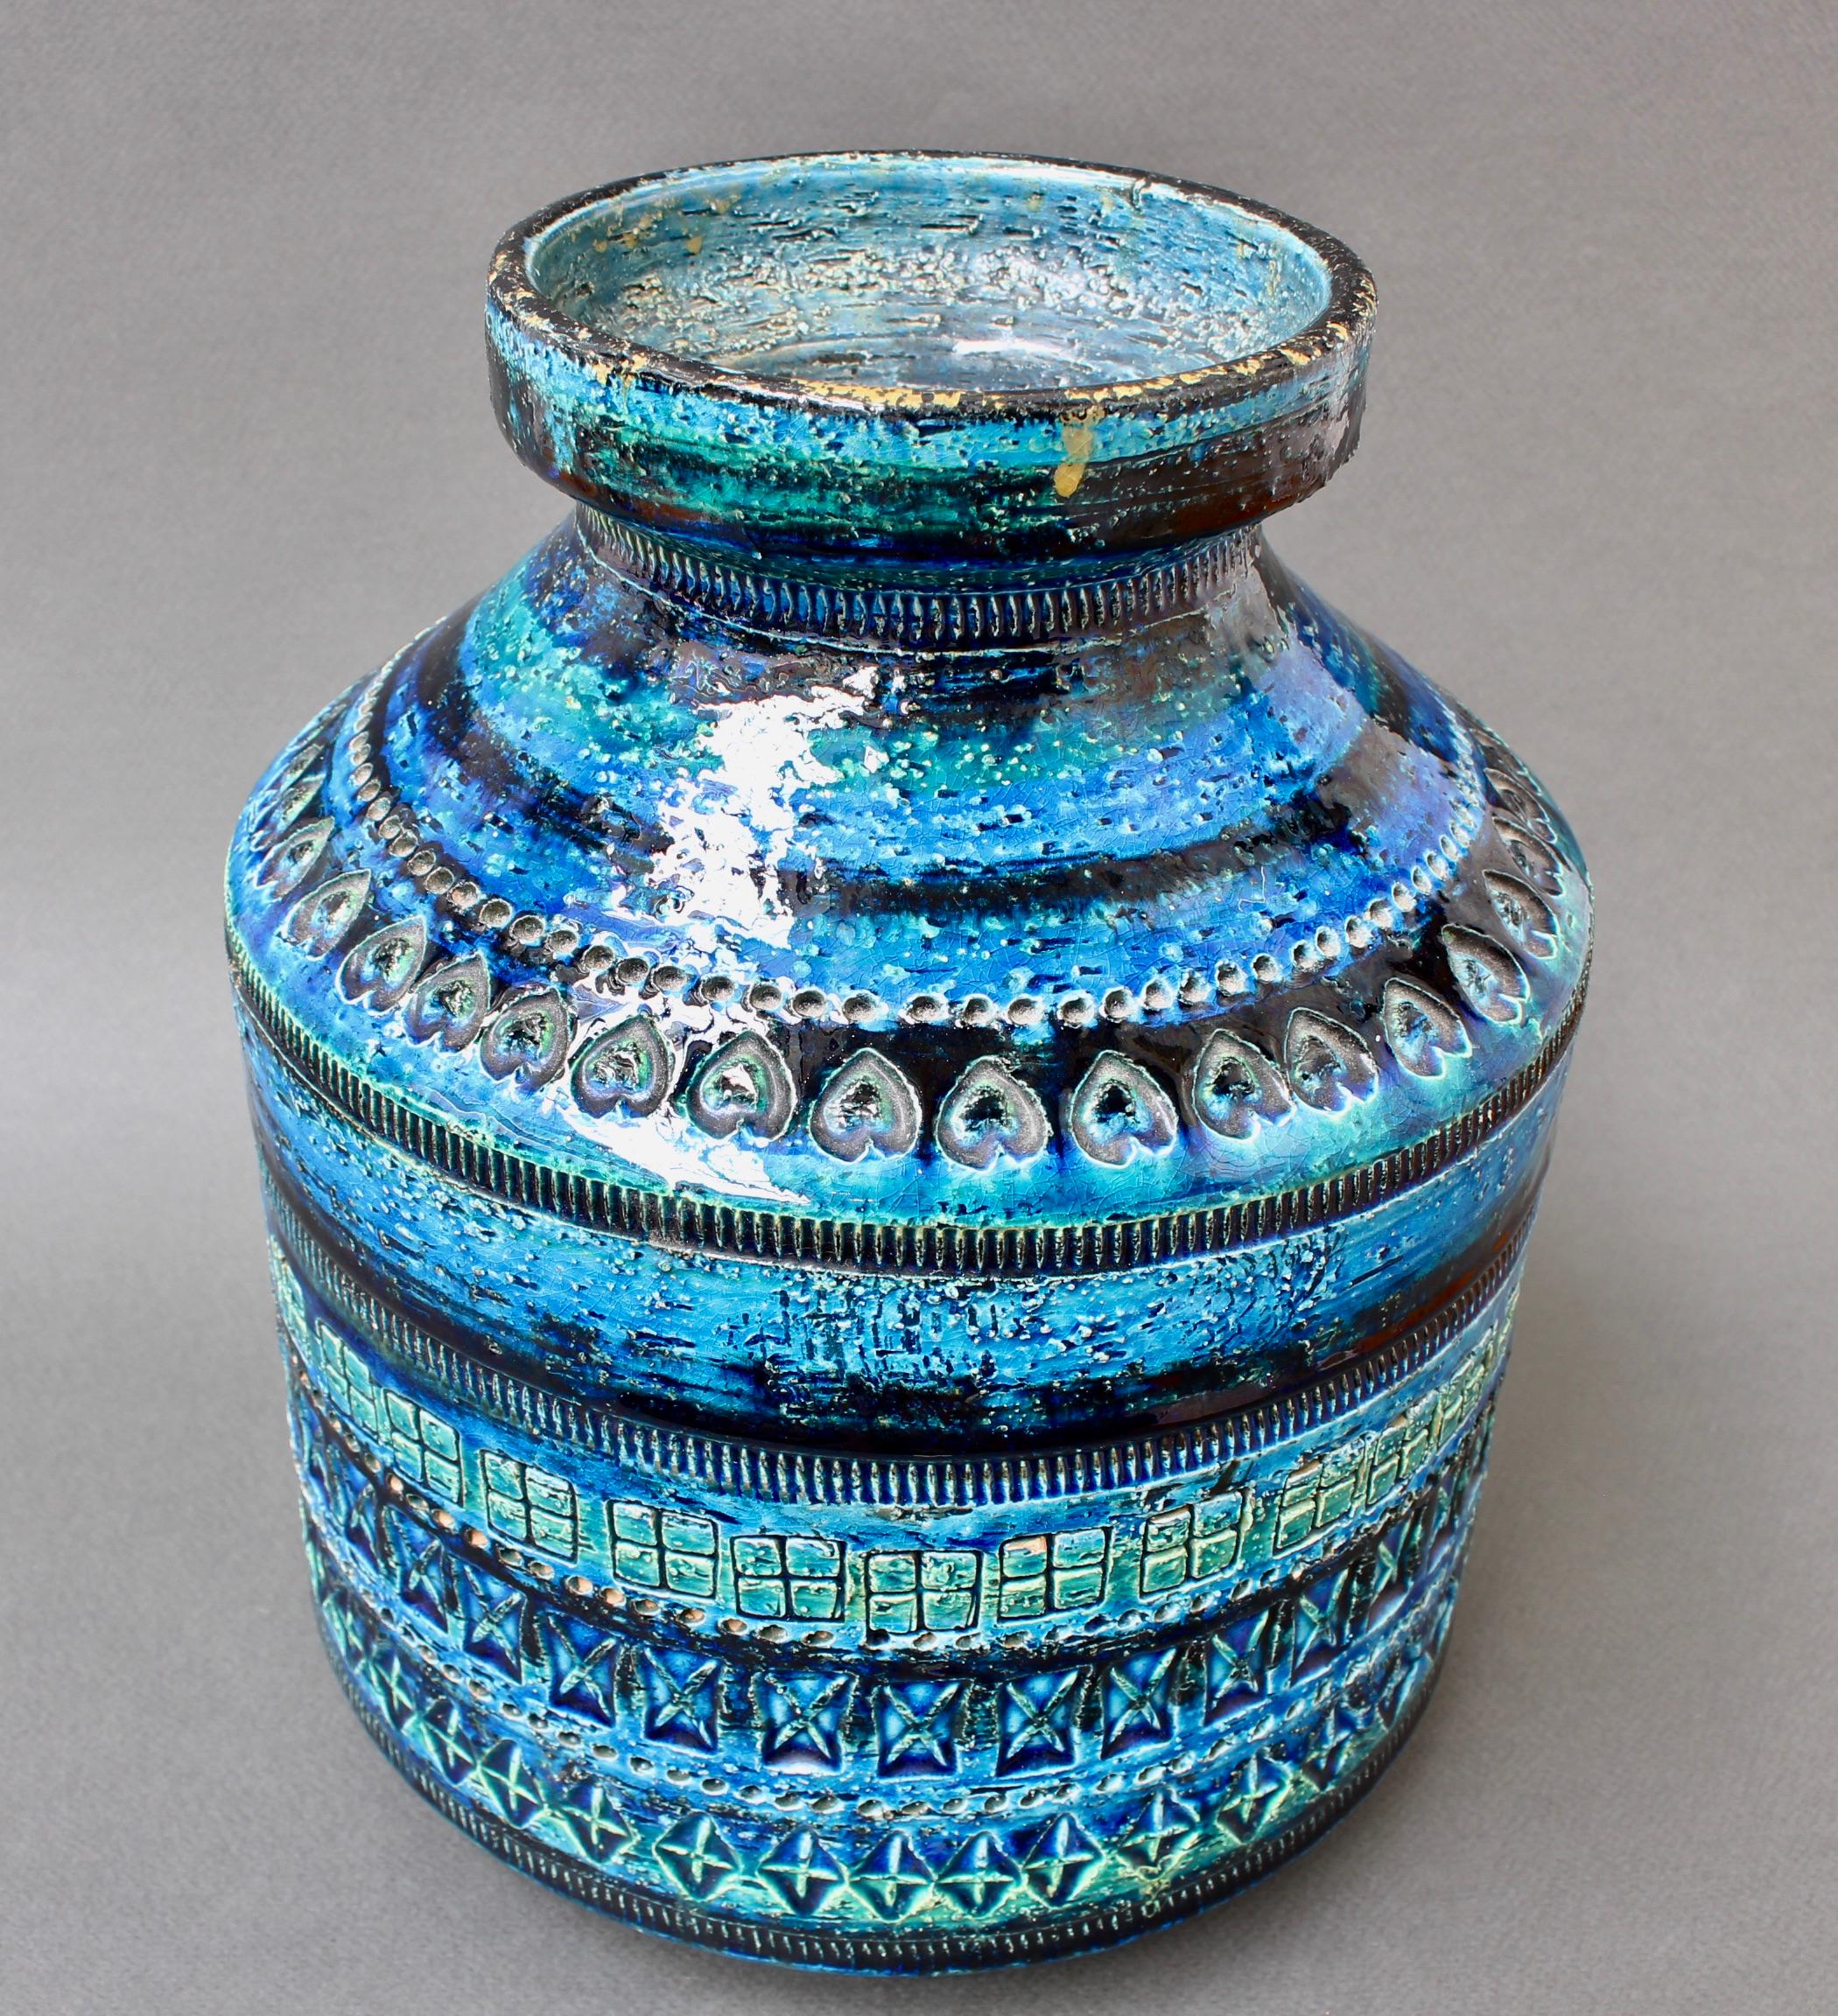 Rimini Blu Vase with Geometric Shapes, Aldo Londi for Bitossi, circa 1960s-1970s 4